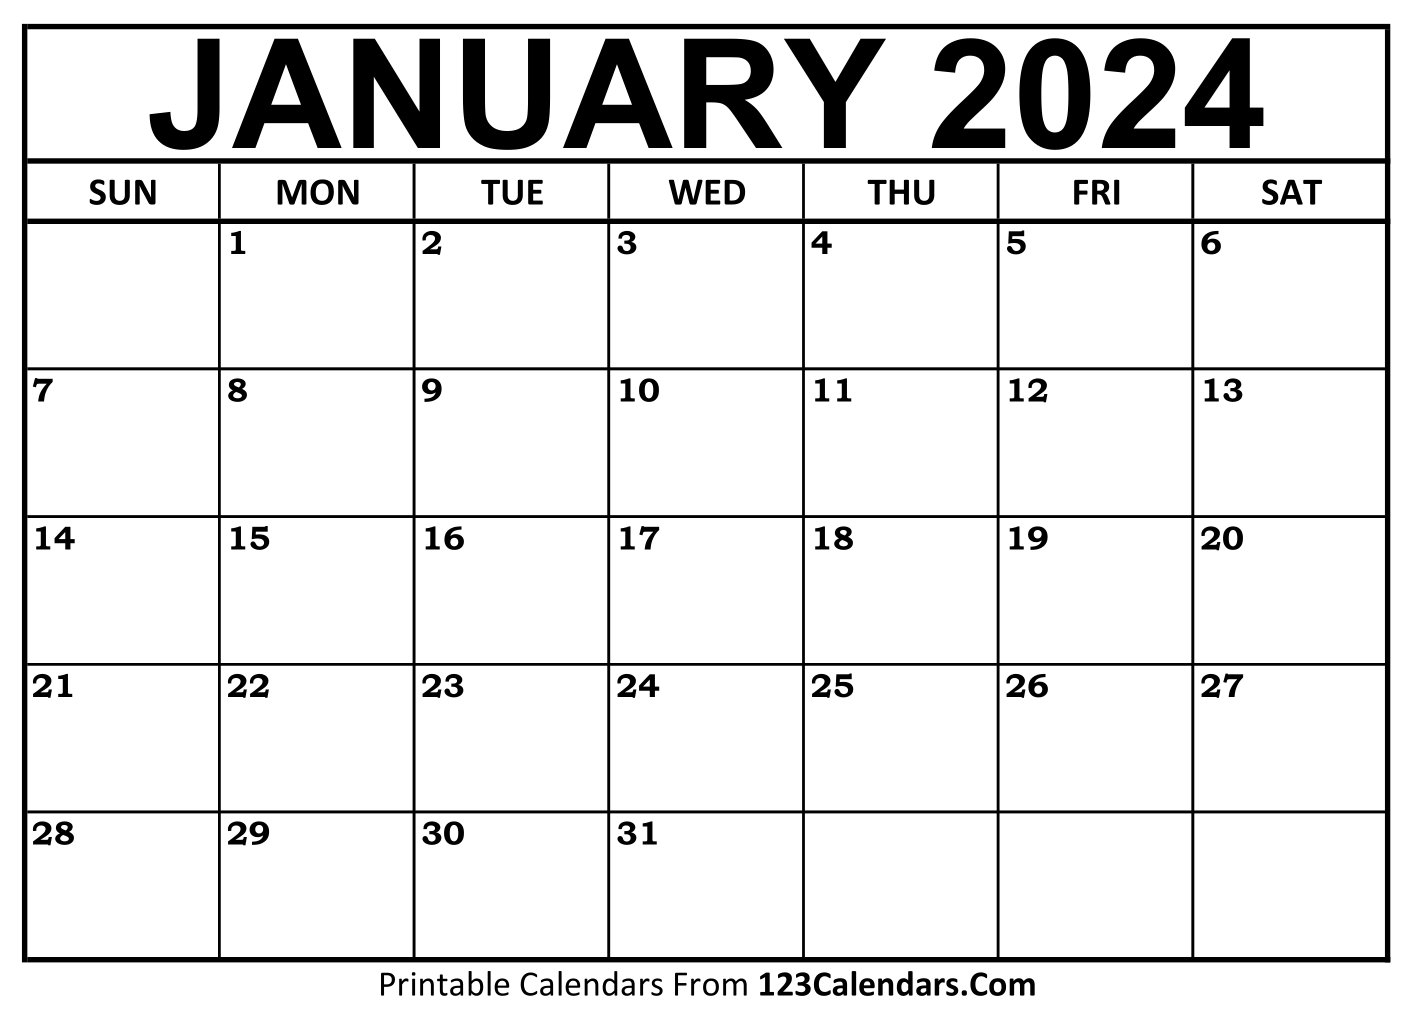 Printable January 2024 Calendar Templates - 123Calendars for Calendar January 2024 Printable Free